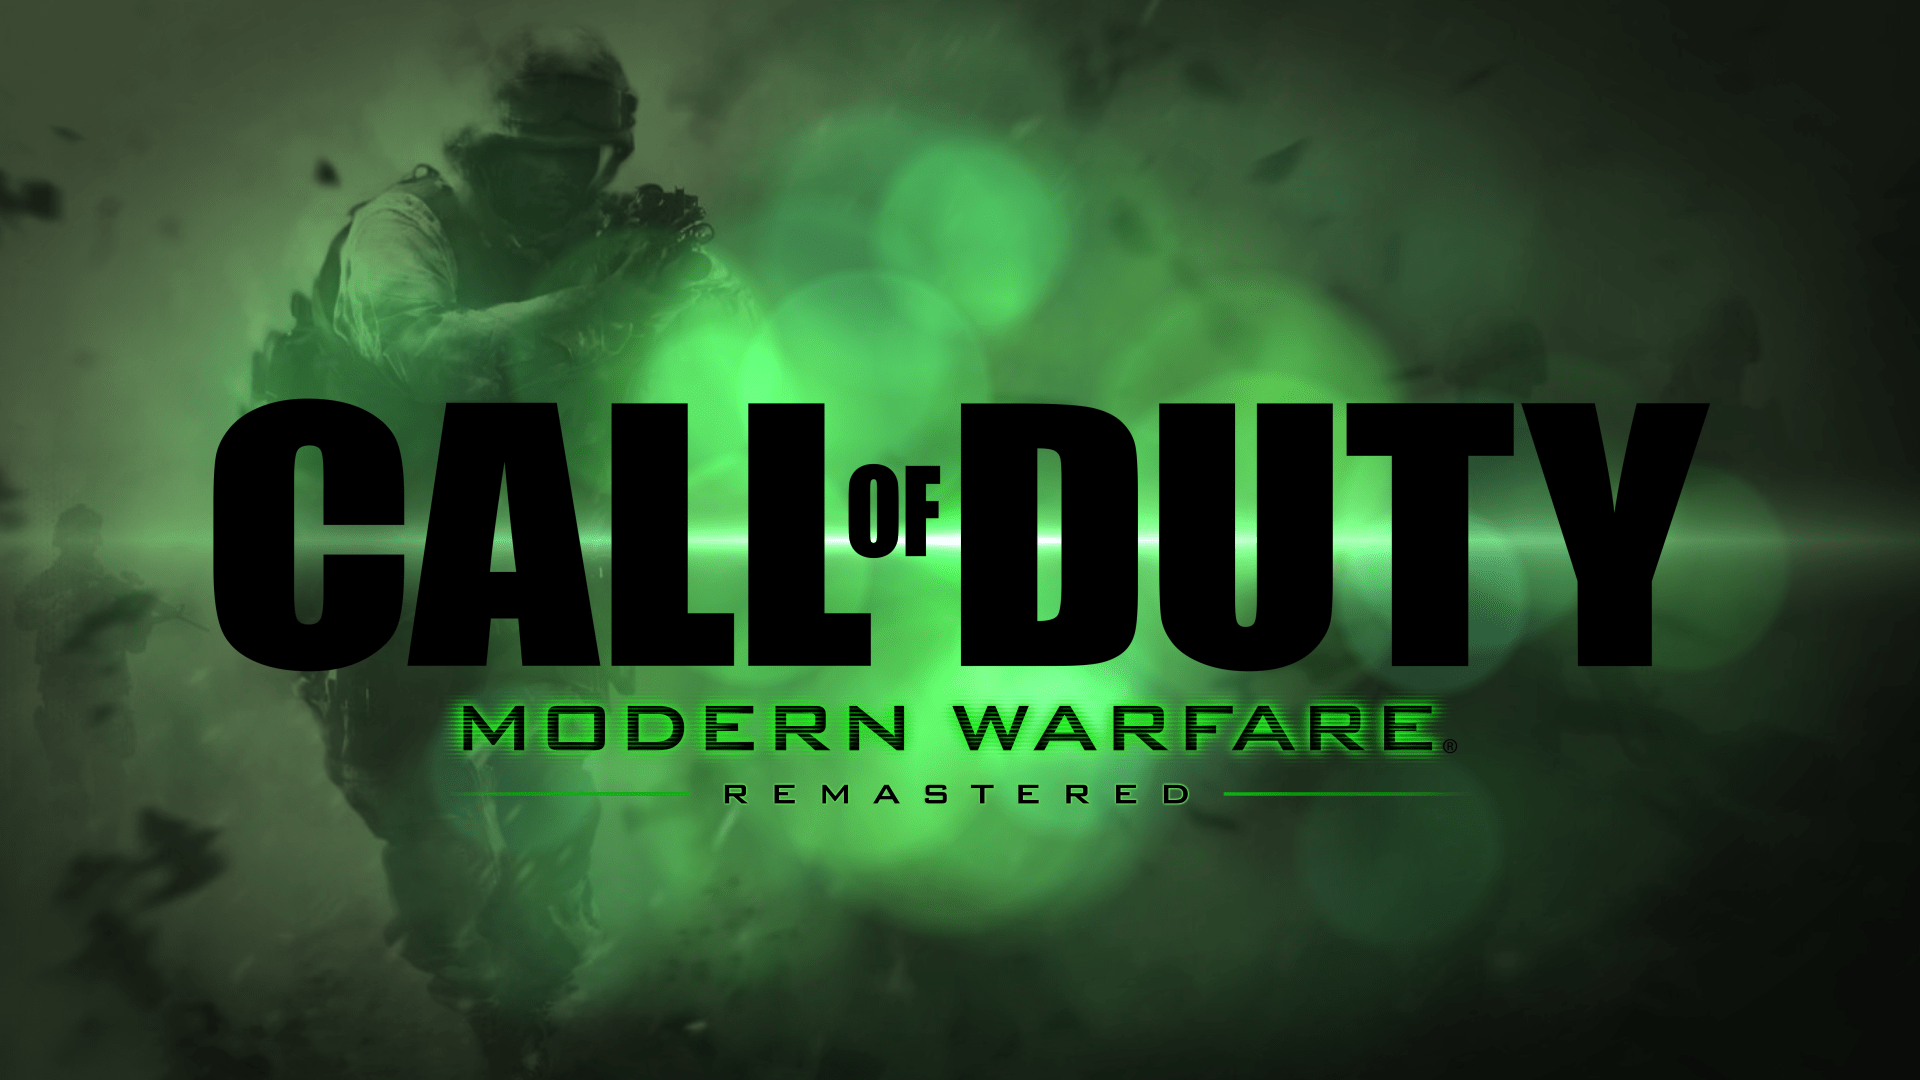 Call of duty 1 4. Call of Duty 4 Modern Warfare Remastered. Call of Duty Modern Warfare 1 Remastered. Call of Duty 4 Modern Warfare ремастере. Call of Duty Modern Warfare 1 ремастер.